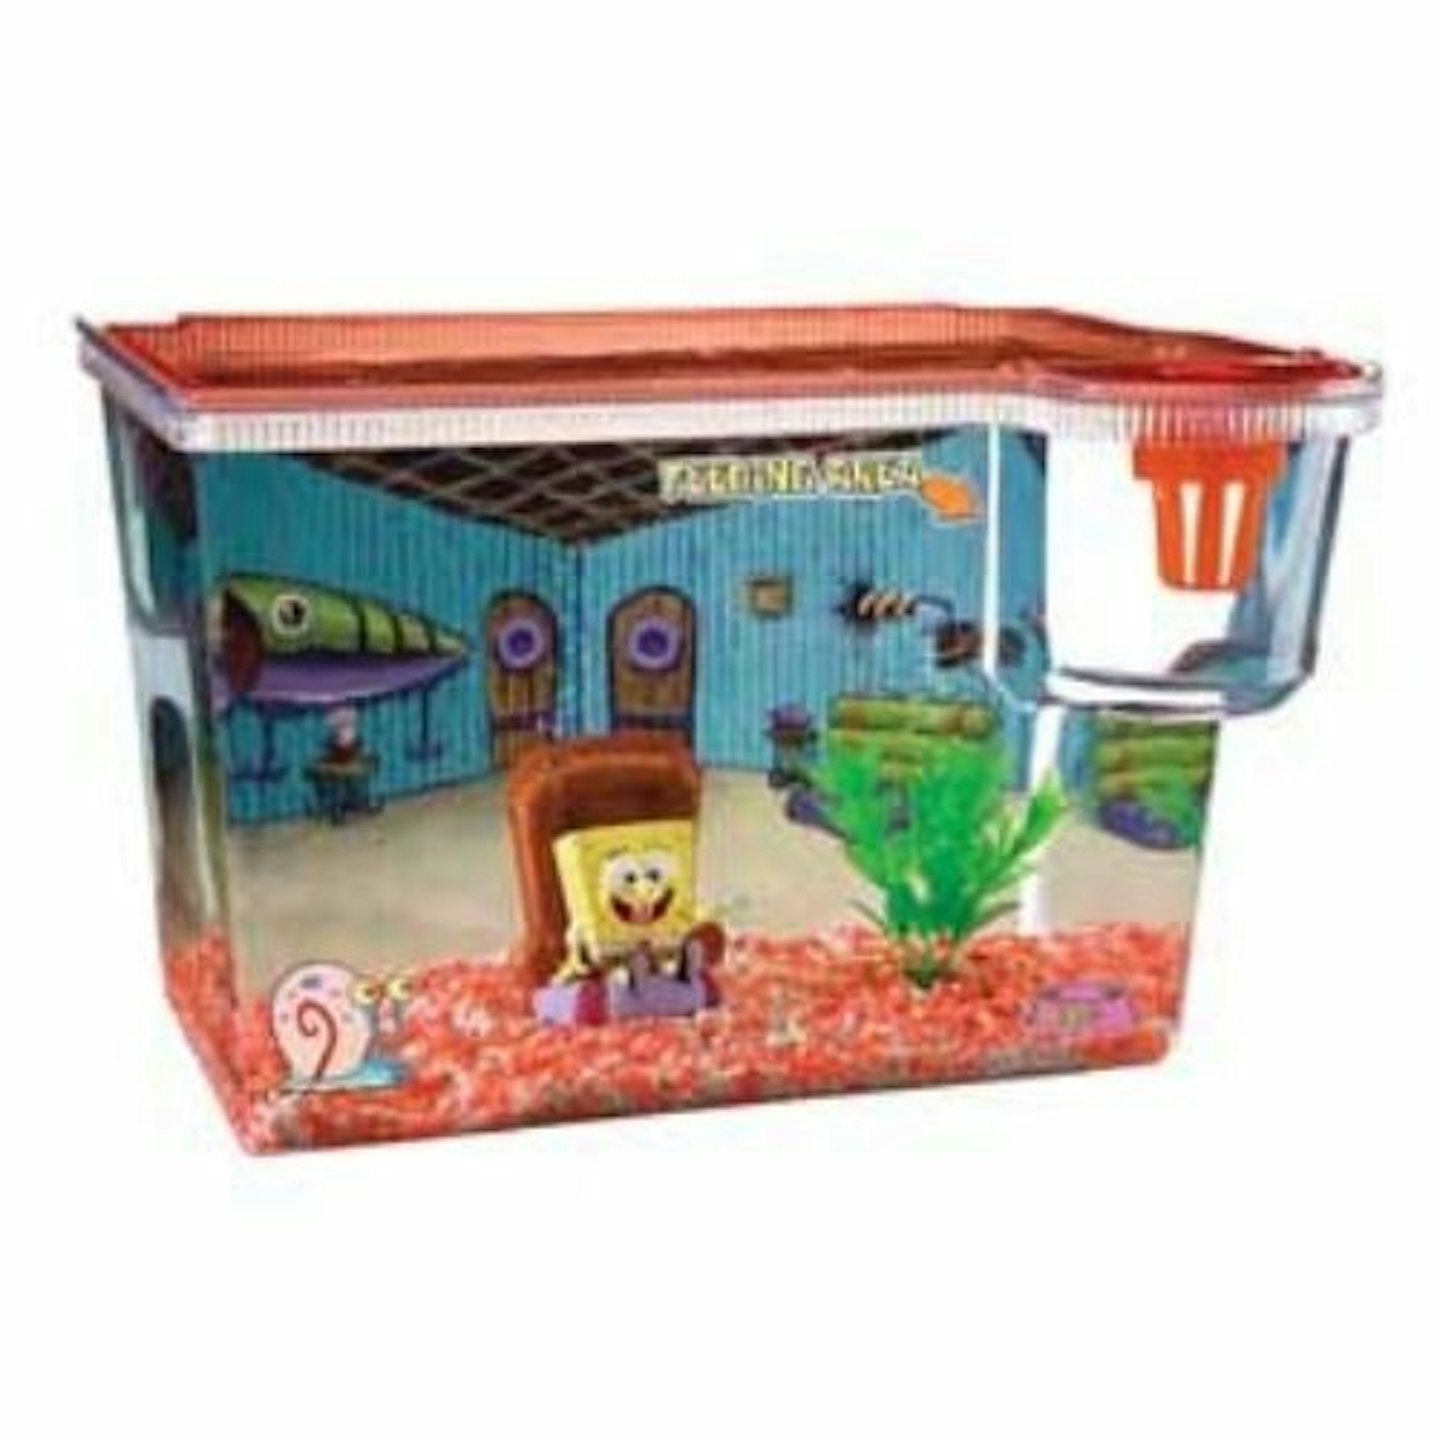 Spongebob Squarepants Home Aquarium Kit